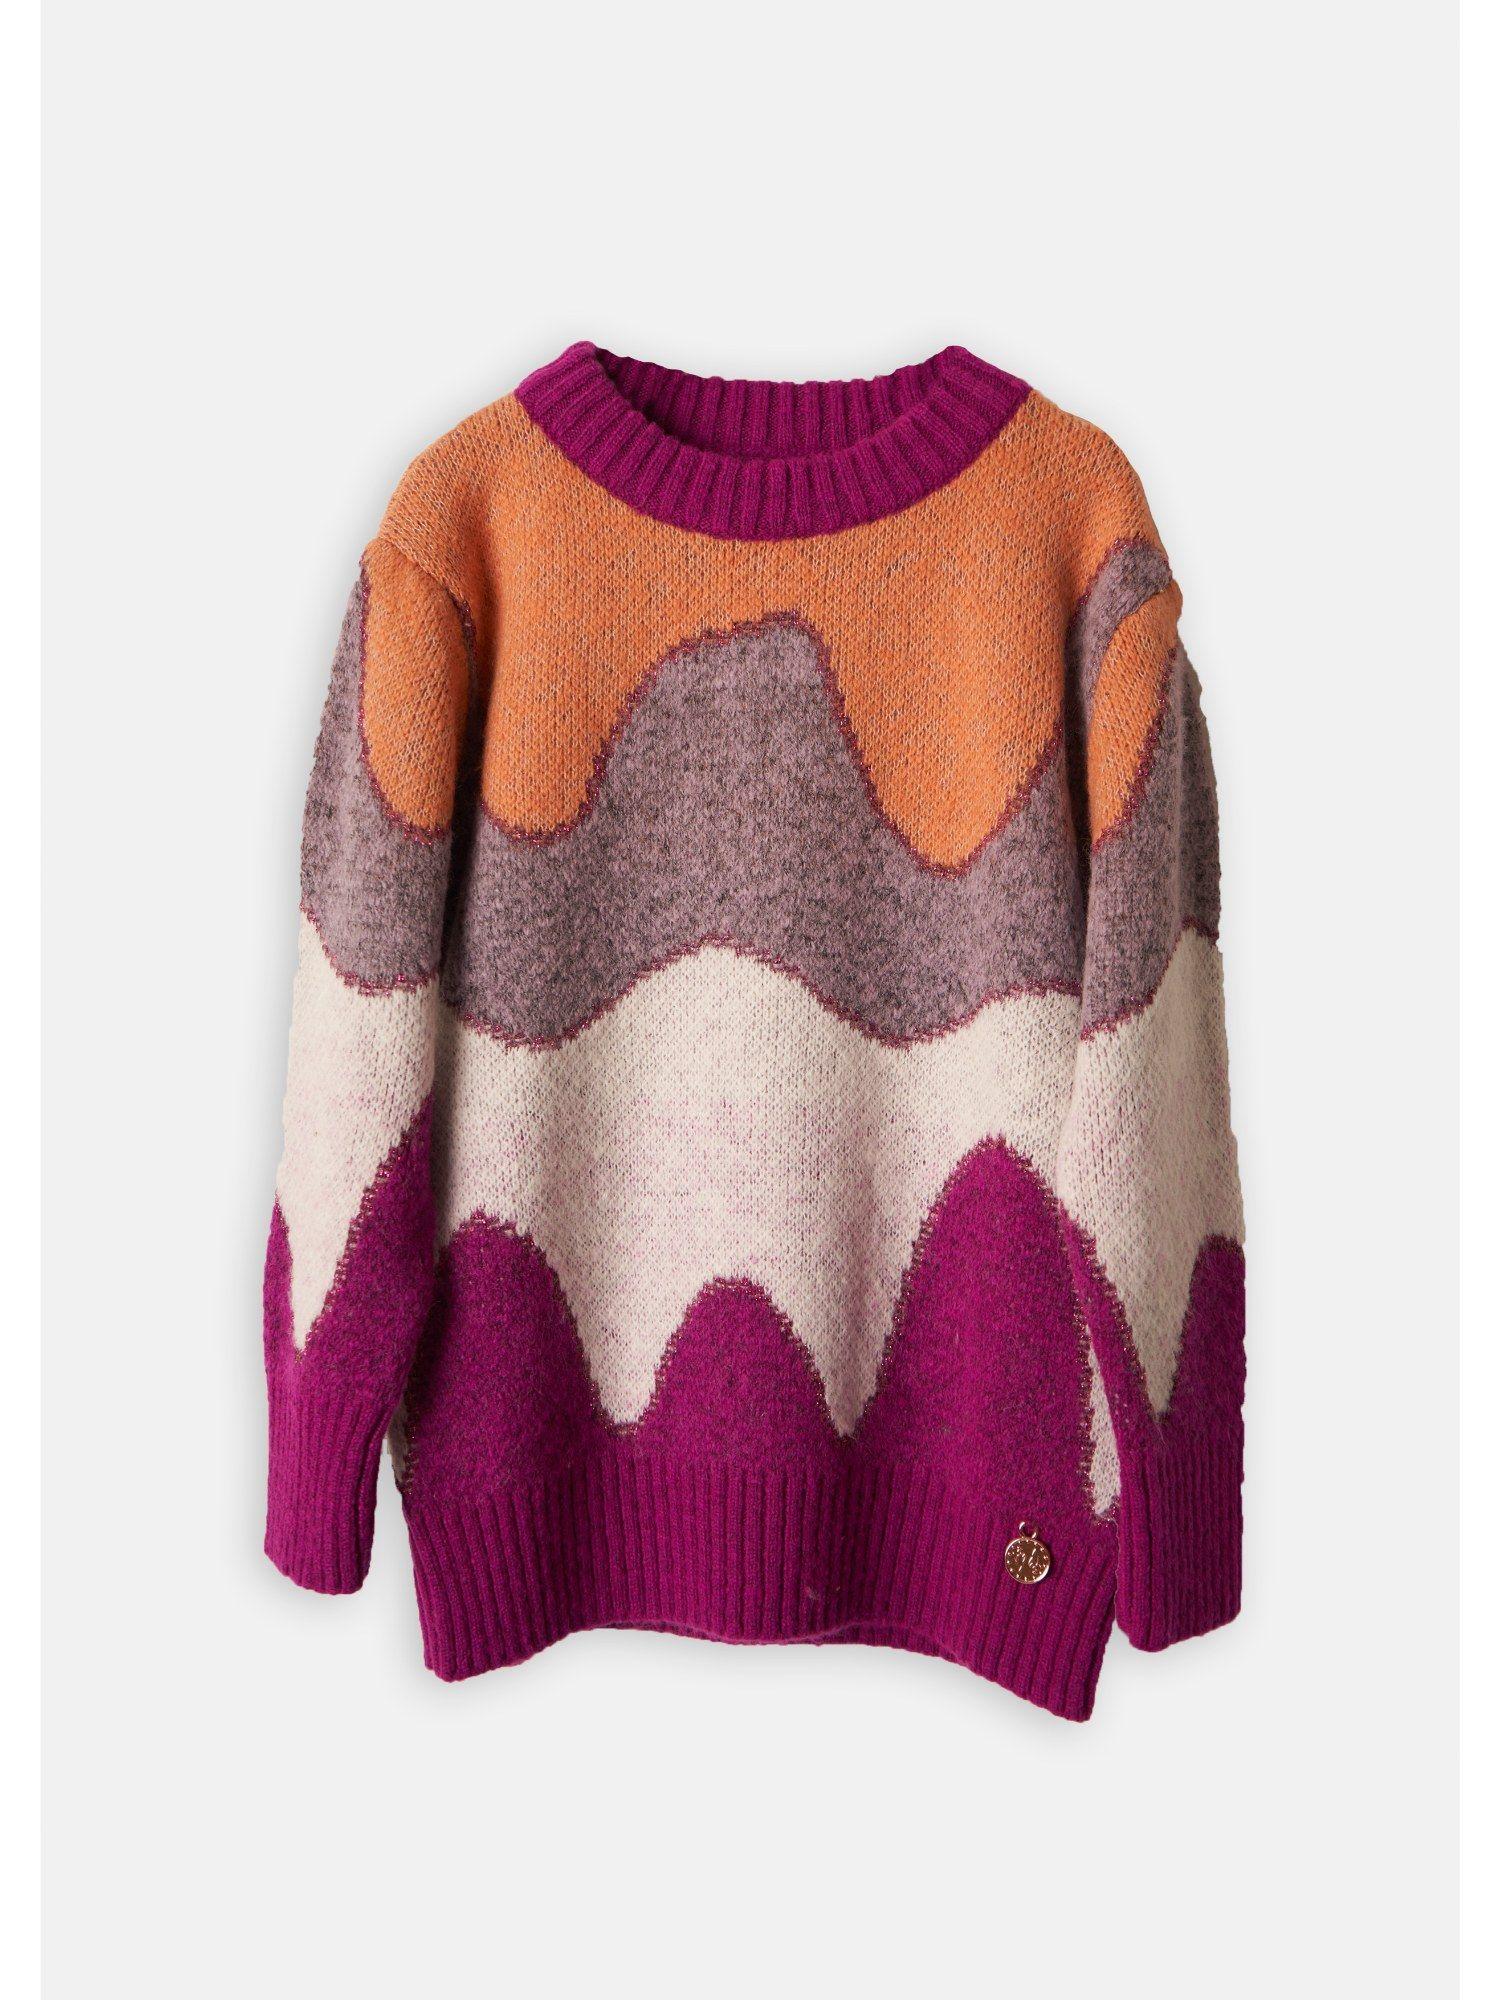 printed multi colored sweater